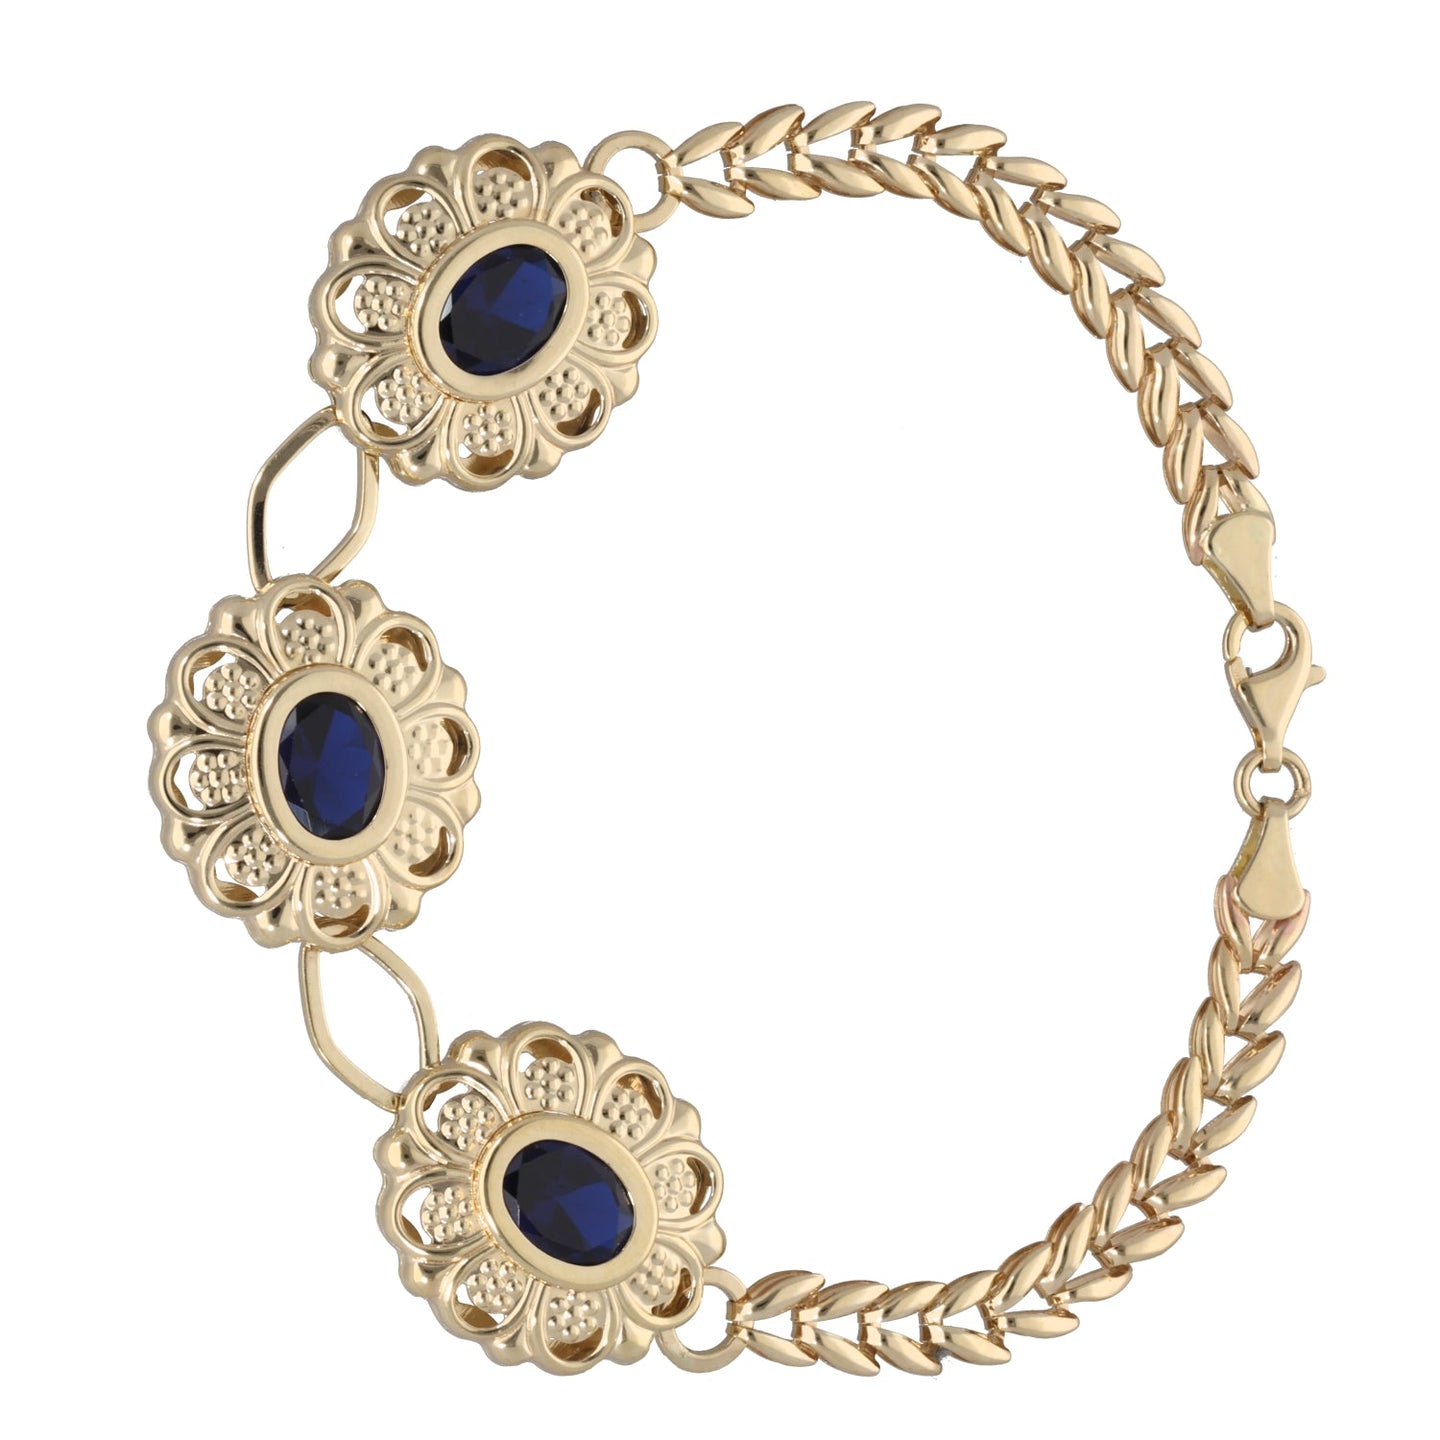 New 14ct Gold Blue CZ Flower Bracelet